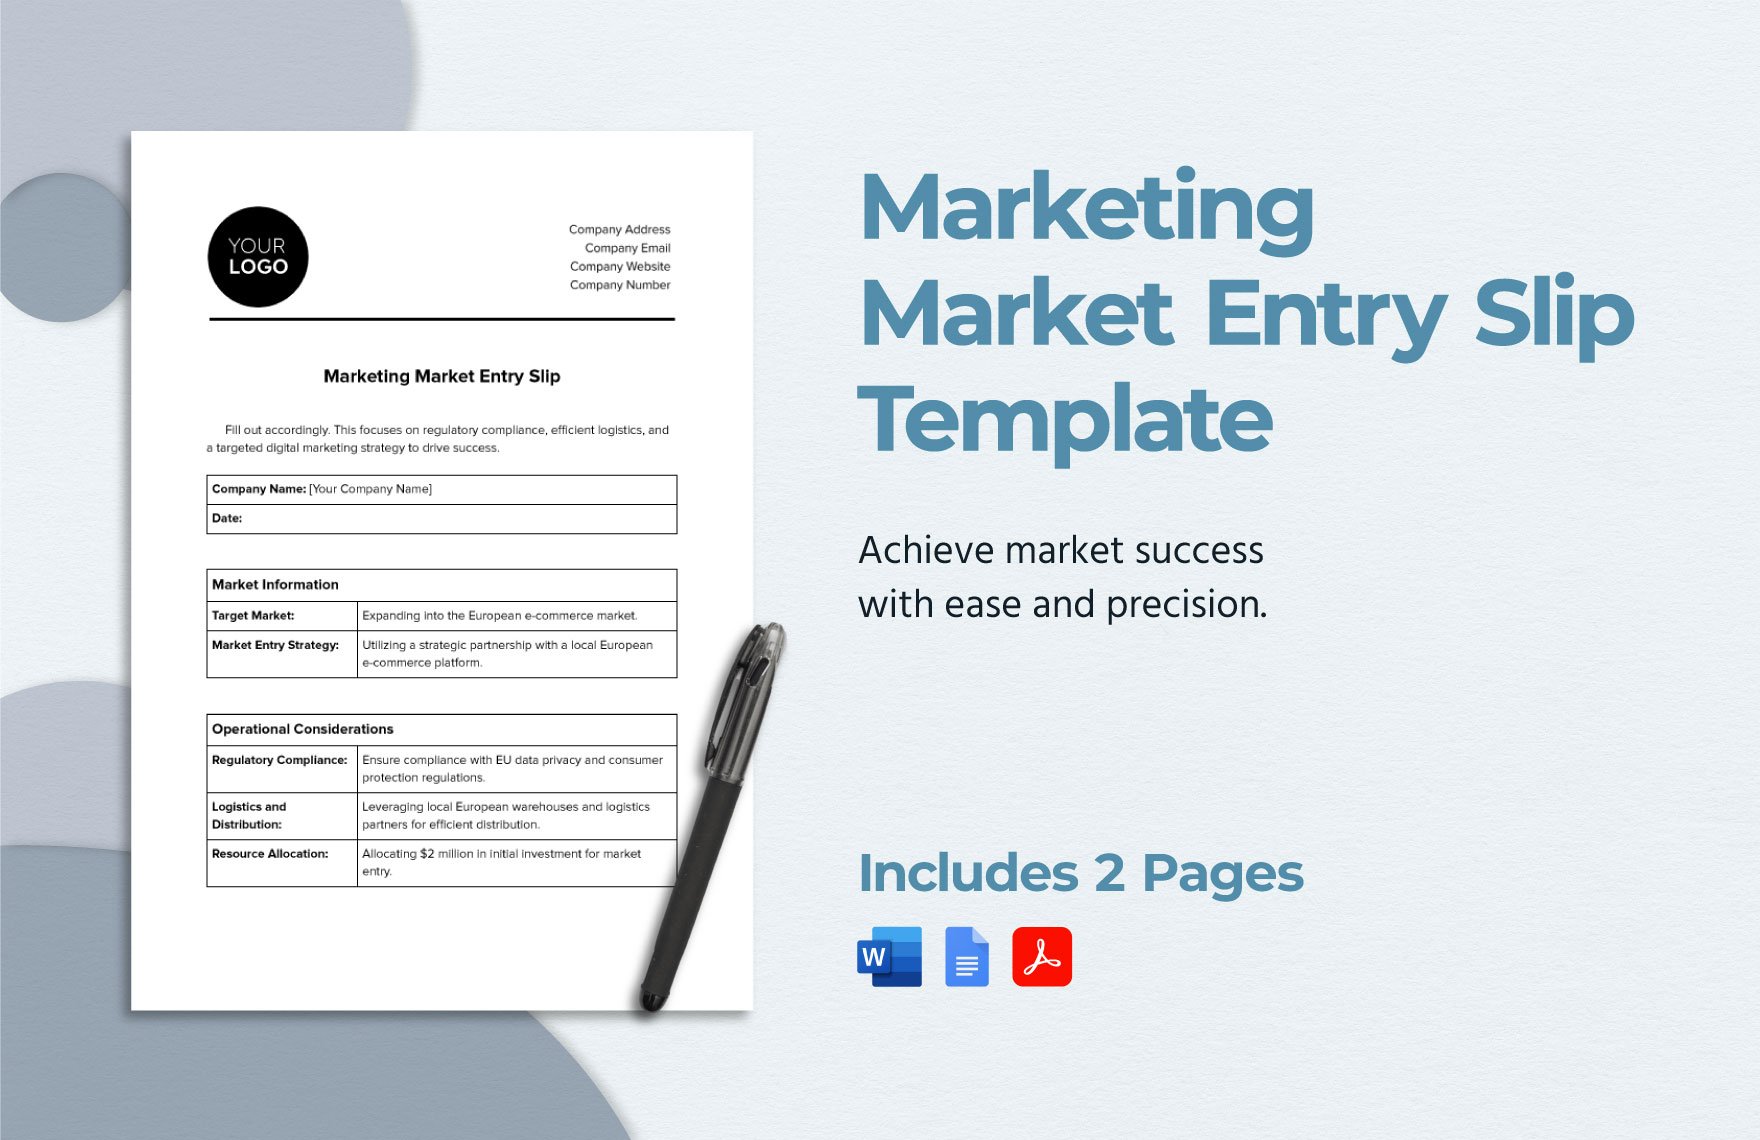 Marketing Market Entry Slip Template in Word, Google Docs, PDF